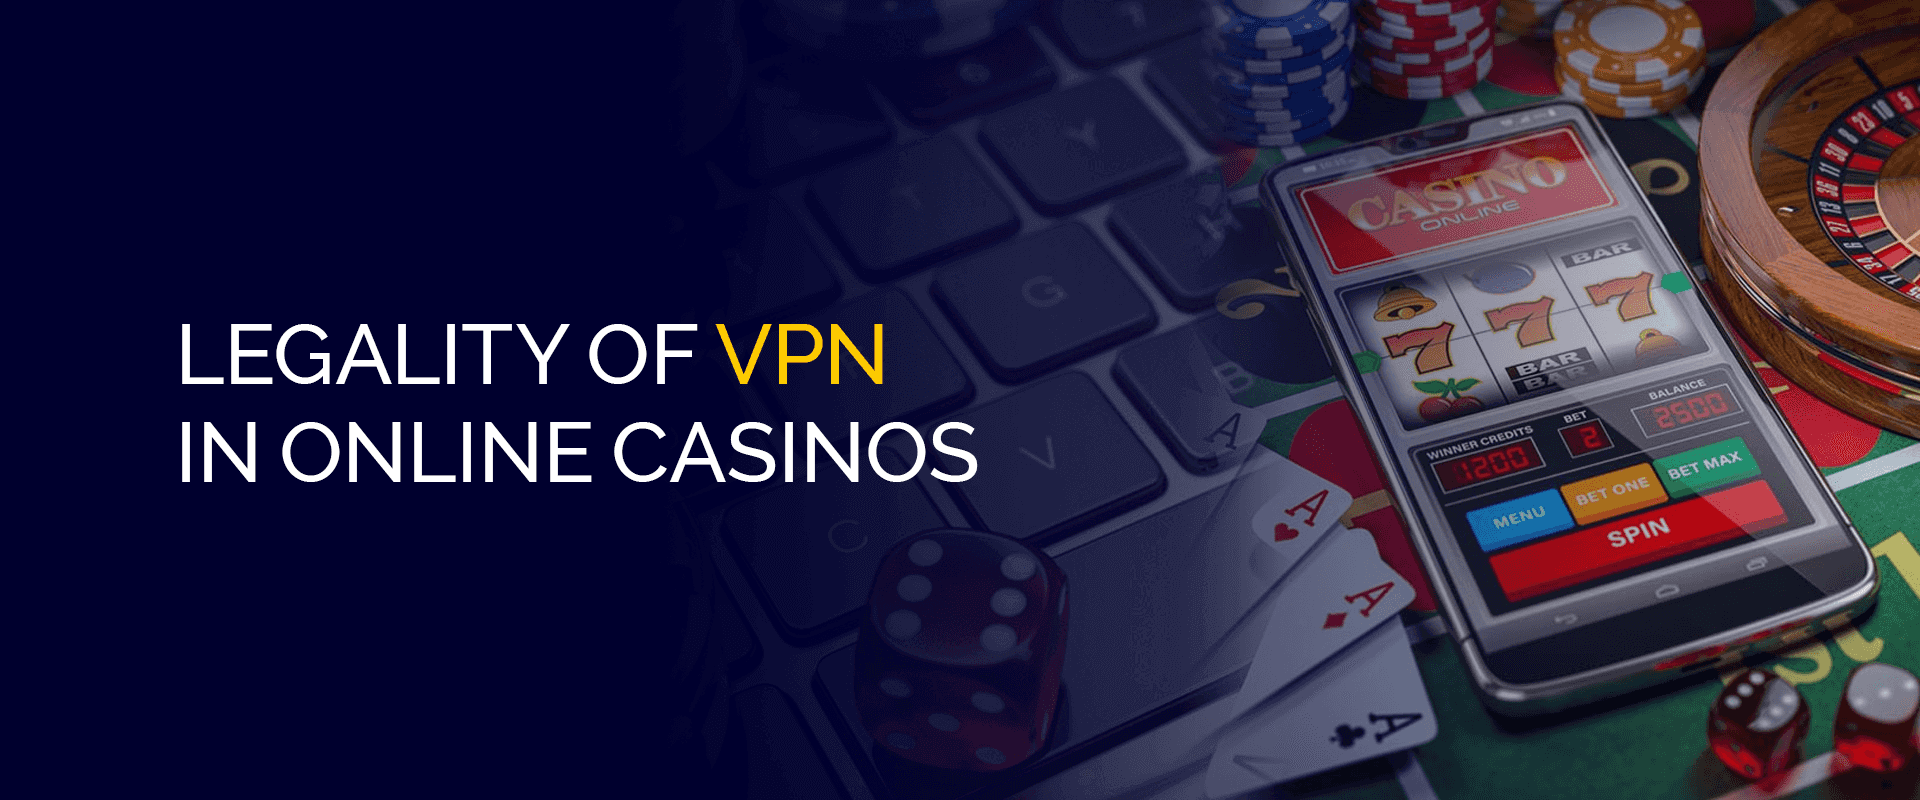 Legality of VPN in Online Casinos